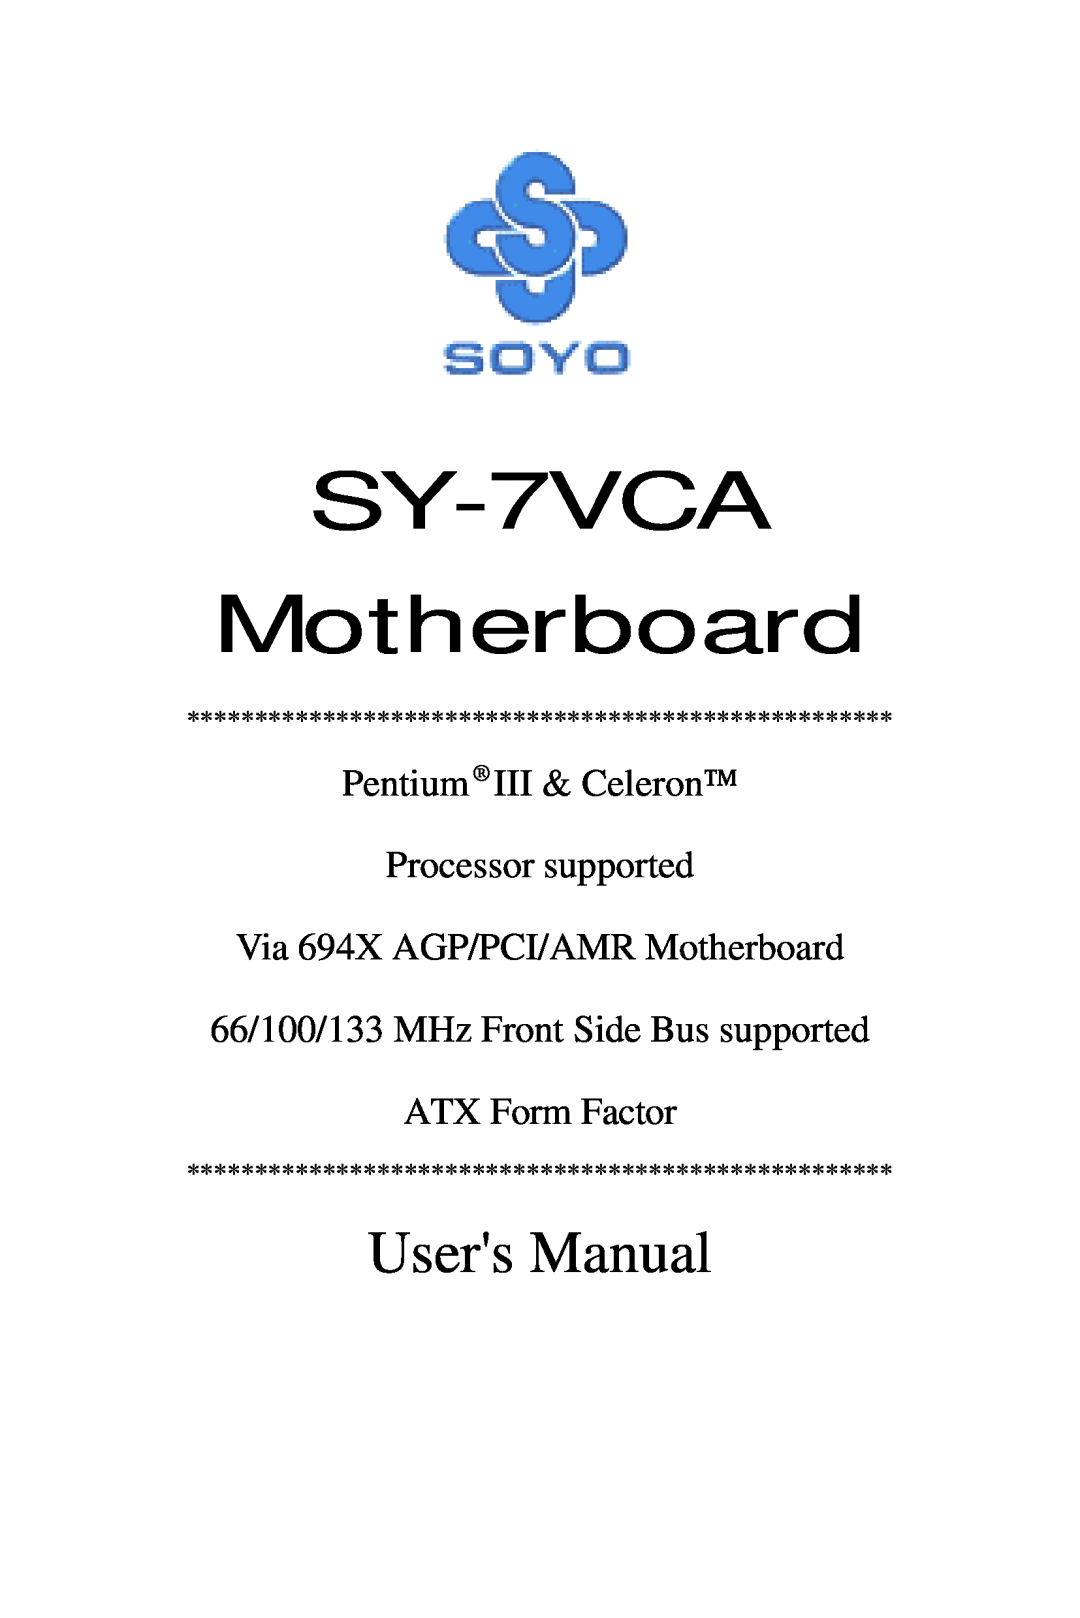 SOYO user manual SY-7VCA Motherboard, Users Manual, Pentium III & Celeron Processor supported 